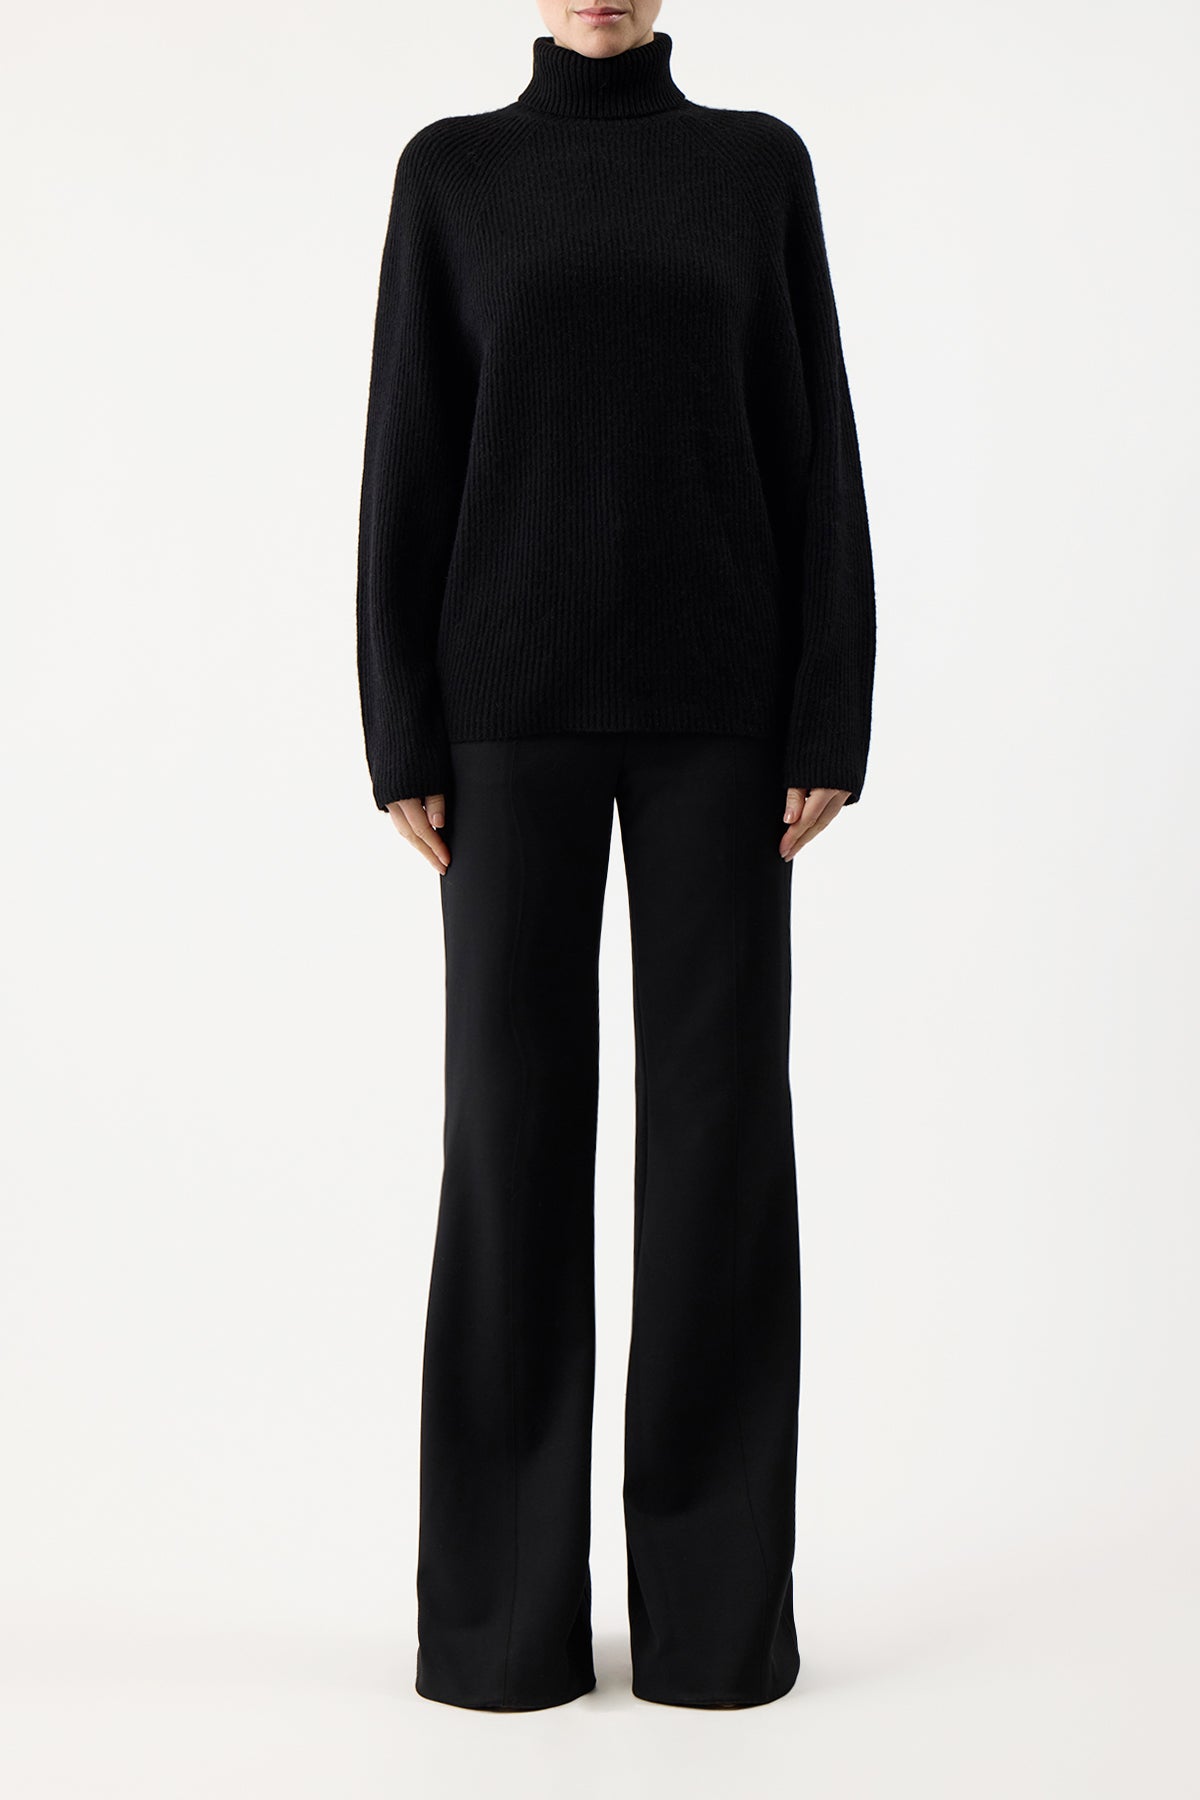 Wigman Knit Turtleneck Sweater in Black Cashmere – Gabriela Hearst